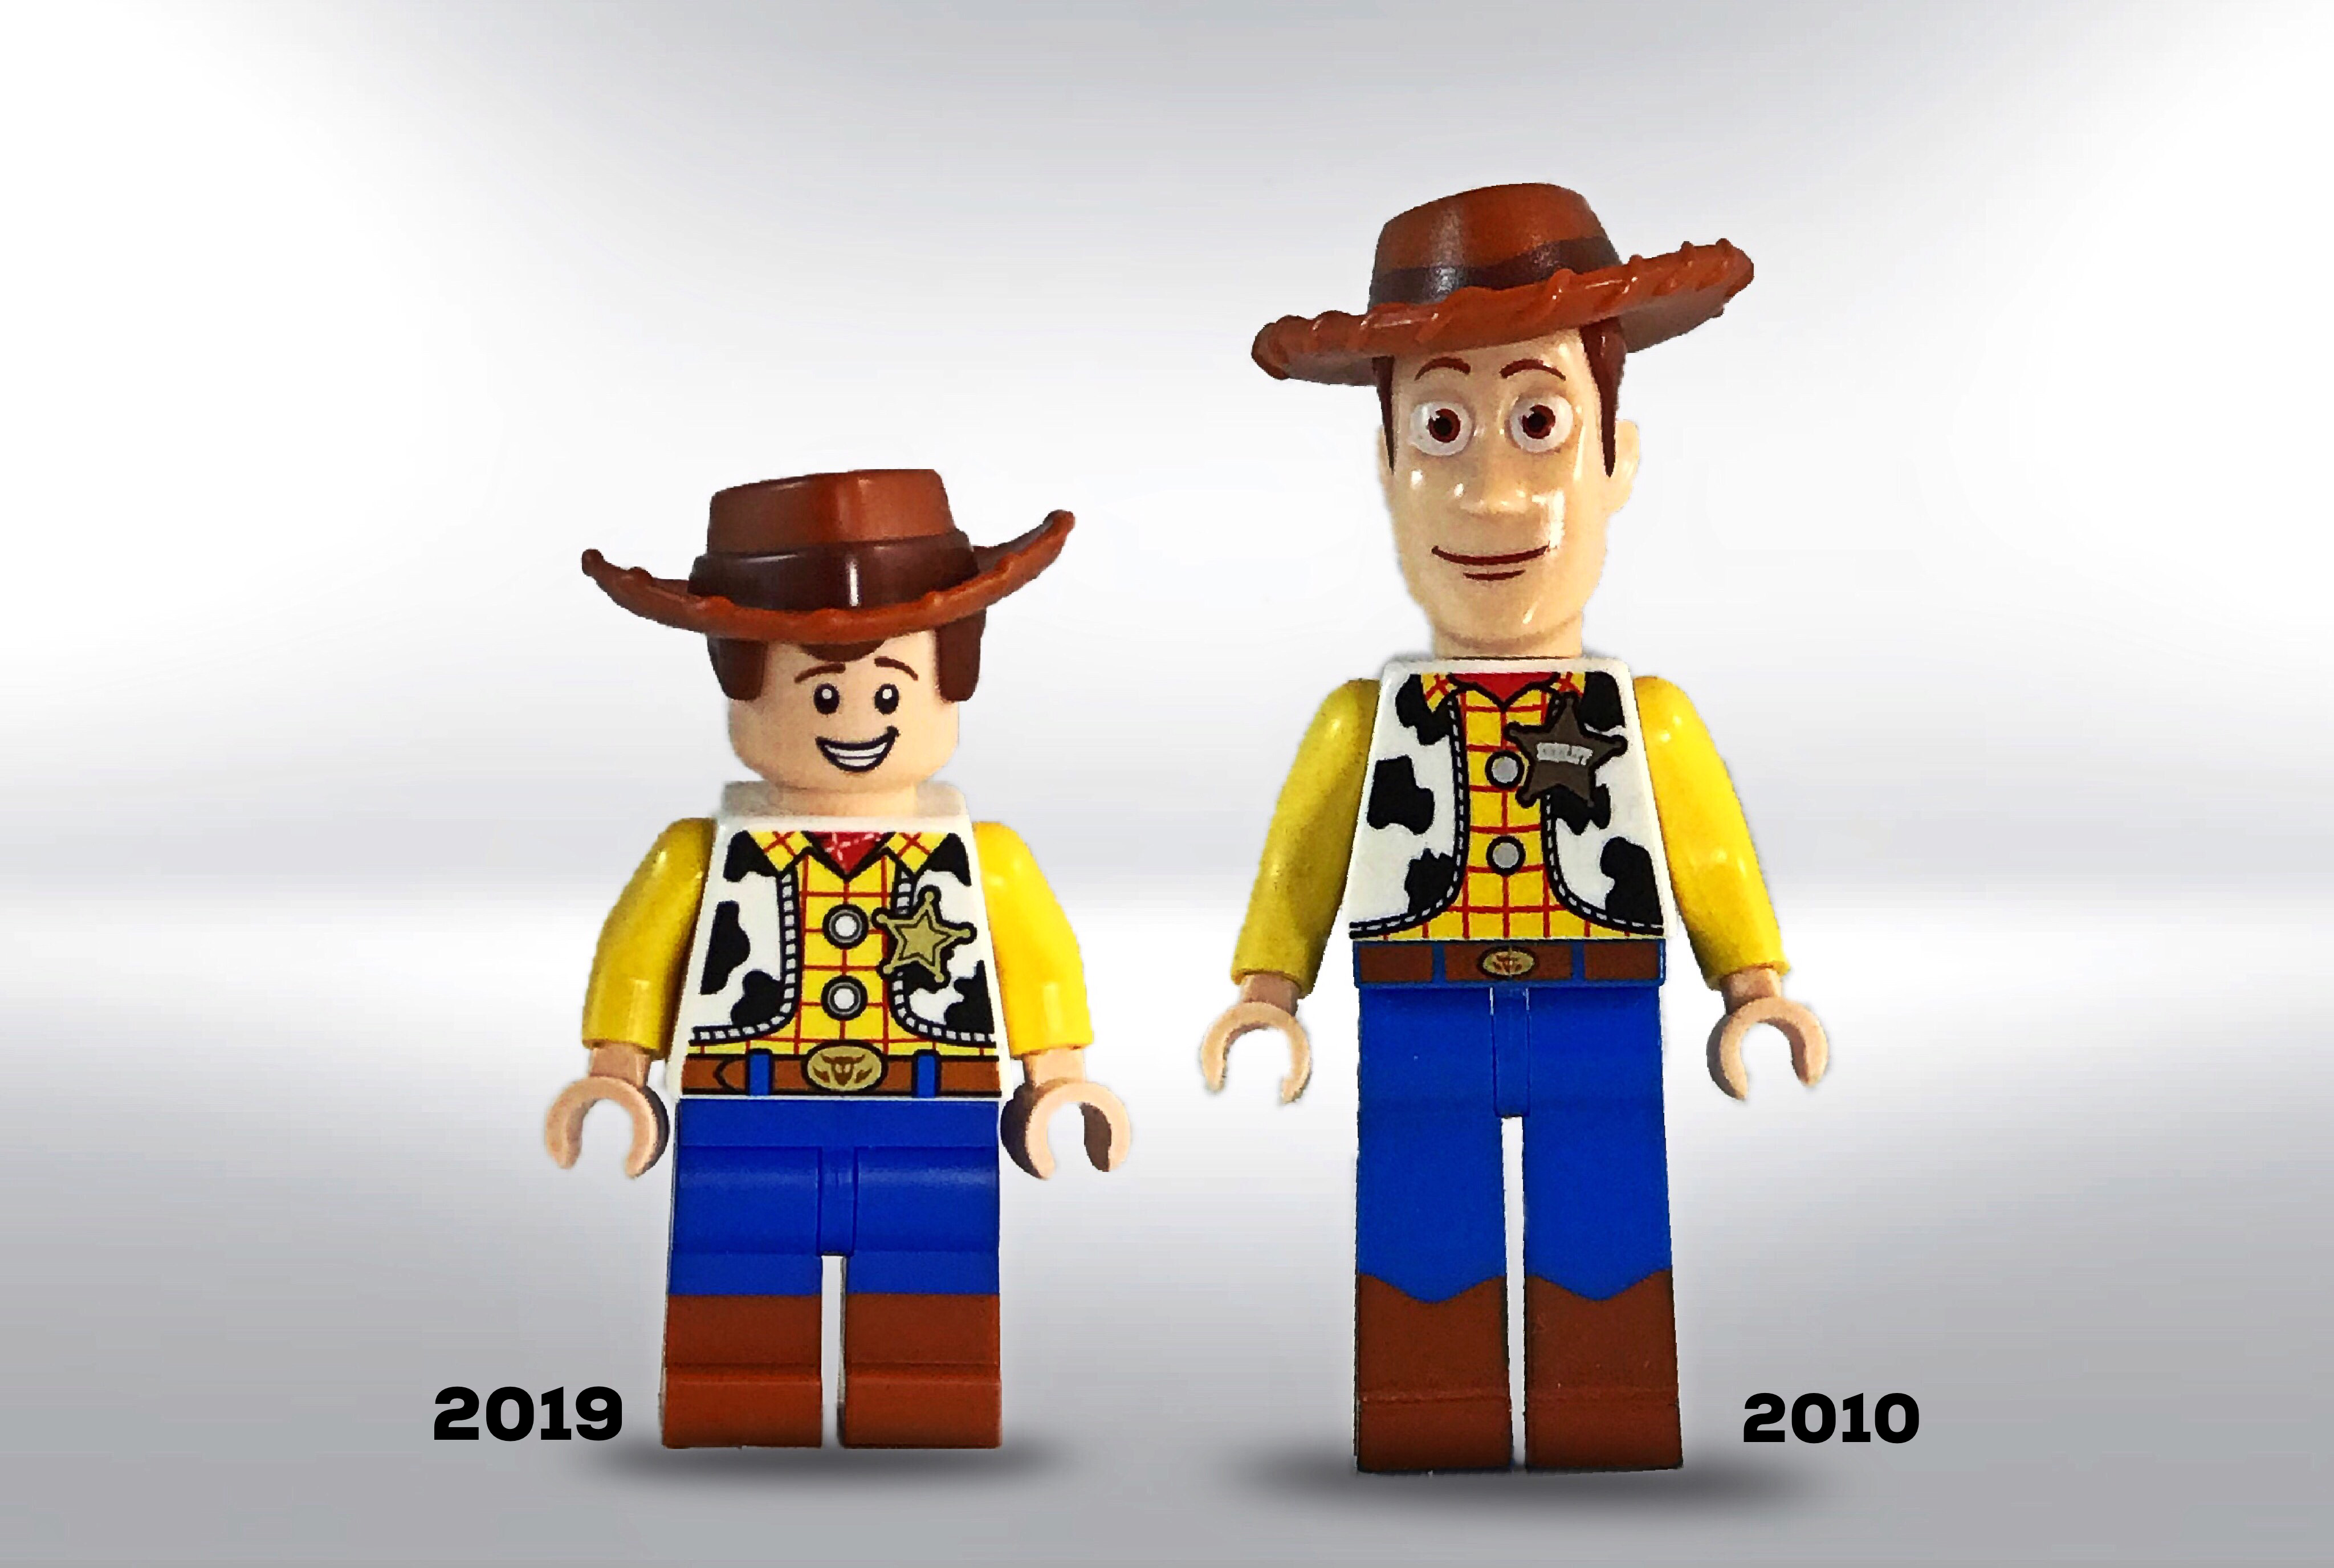 Woody LEGO Minifigure Disney Toy Story 